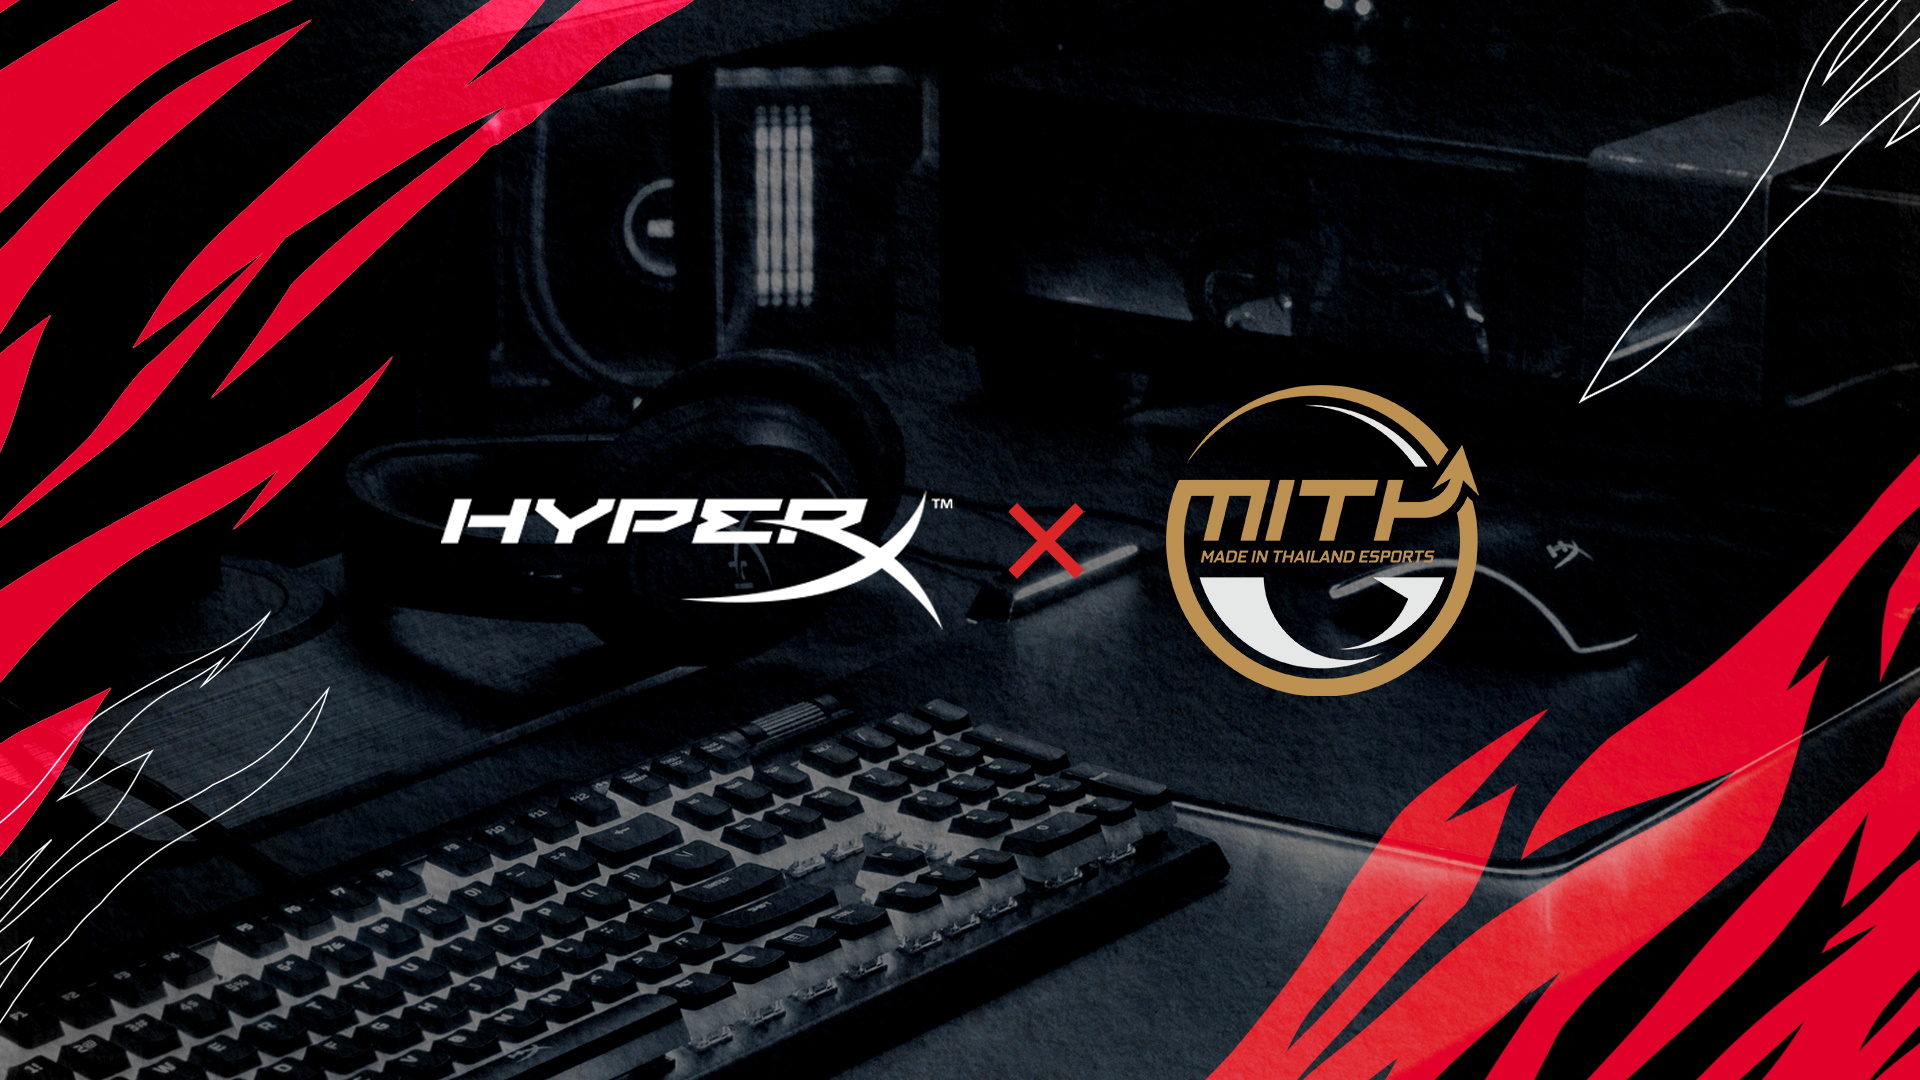 hyperx named official peripheral sponsor of mith esports HyperX ได้รับการแต่งตั้งให้เป็นผู้สนับสนุนอุปกรณ์เกมมิ่งอย่างเป็นทางการของ MiTH Esports